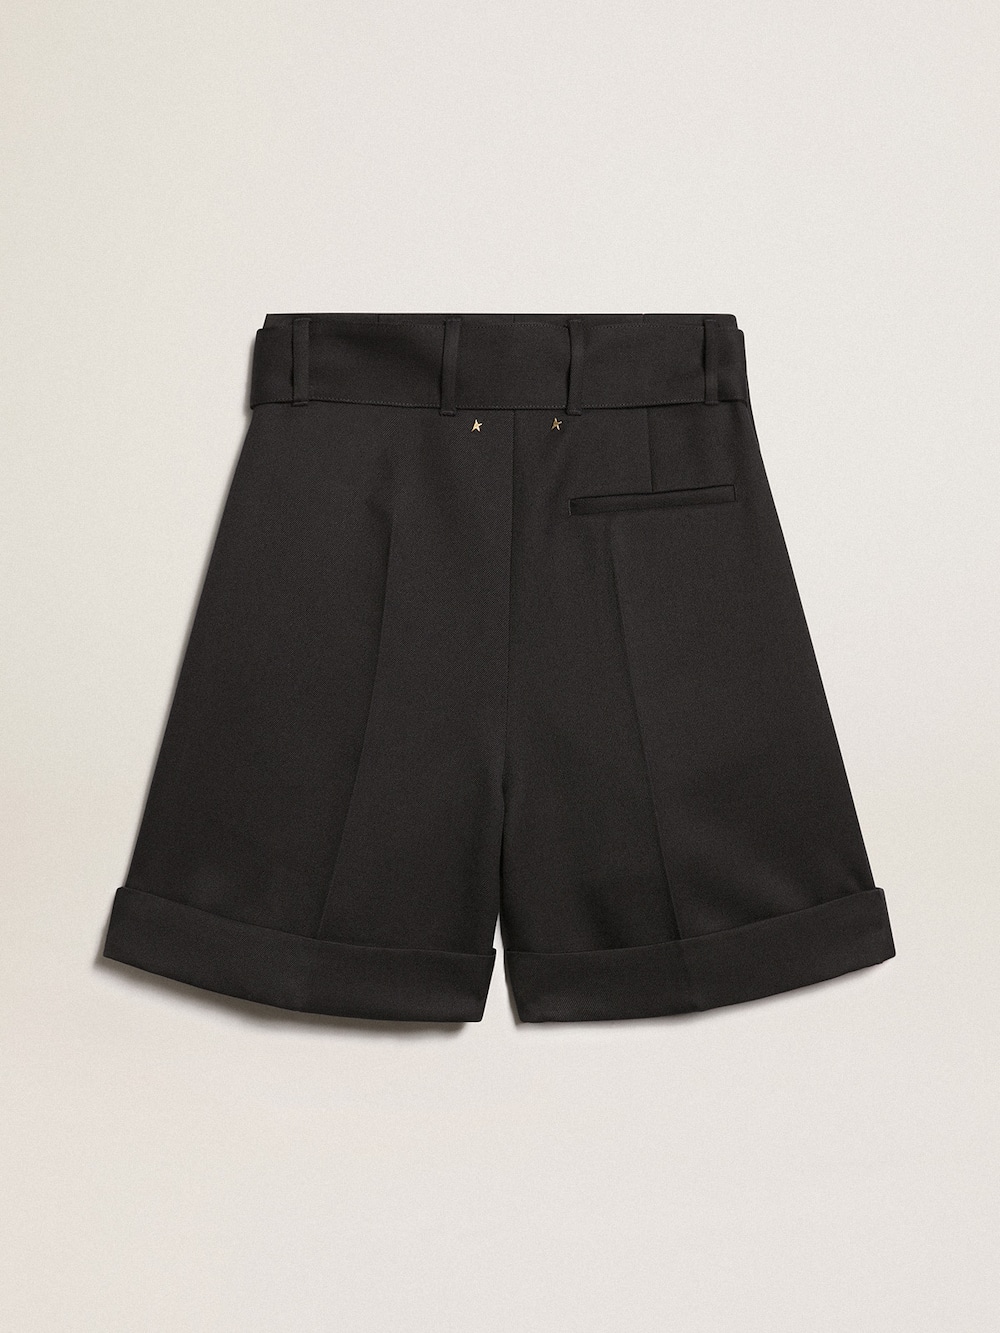 Golden Goose - Women's shorts in black wool gabardine with waist belt in 